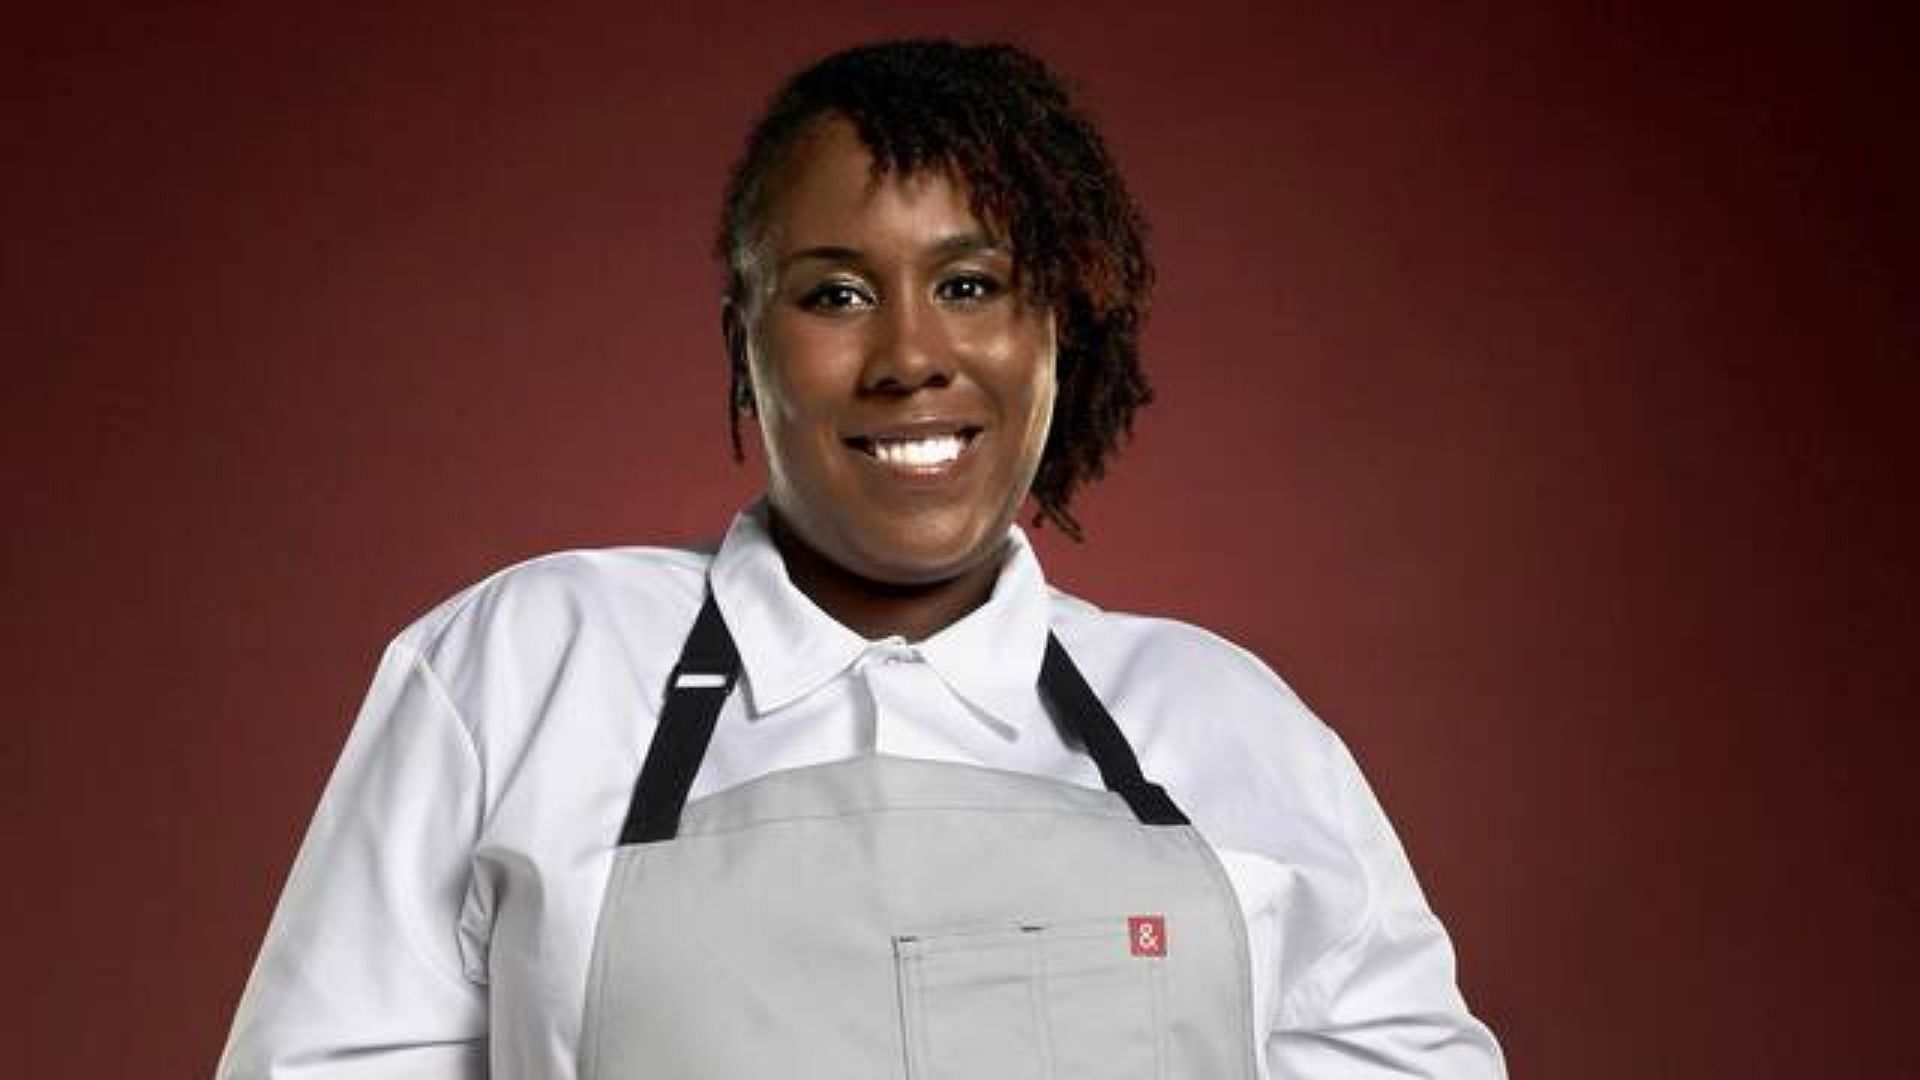 Kamahlai Stewart is set to participate on Next Level Chef season 2